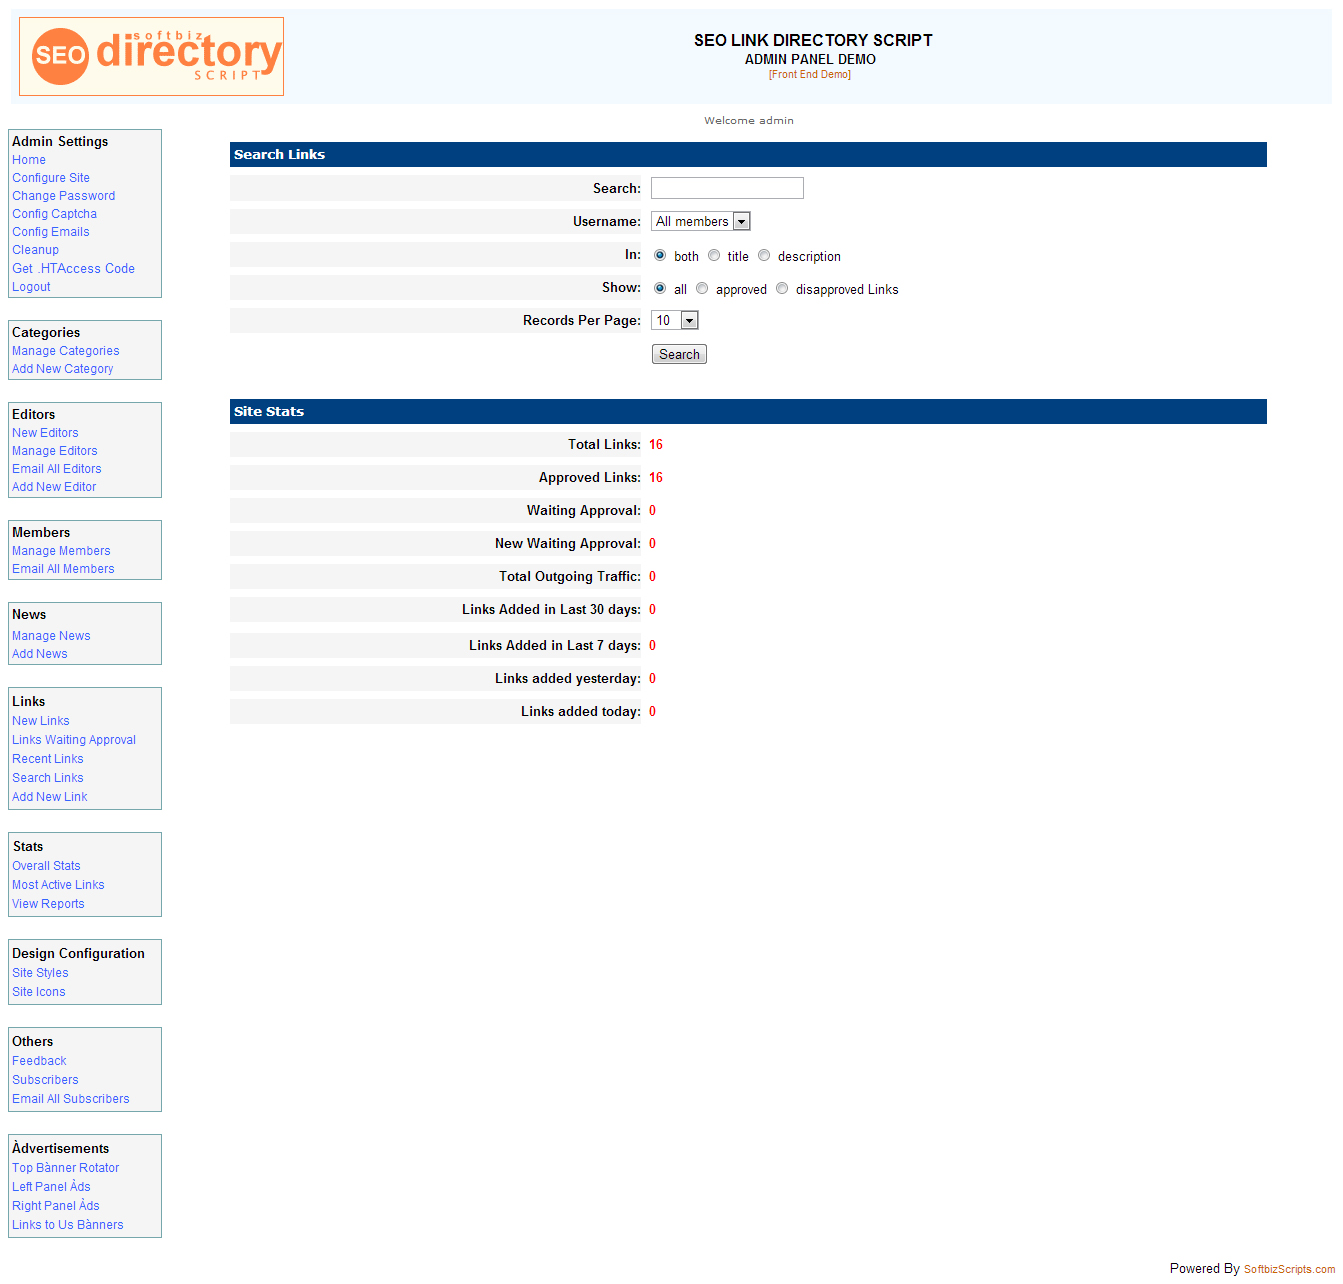 SEO Link Directory Script, Website Builder Software Screenshot